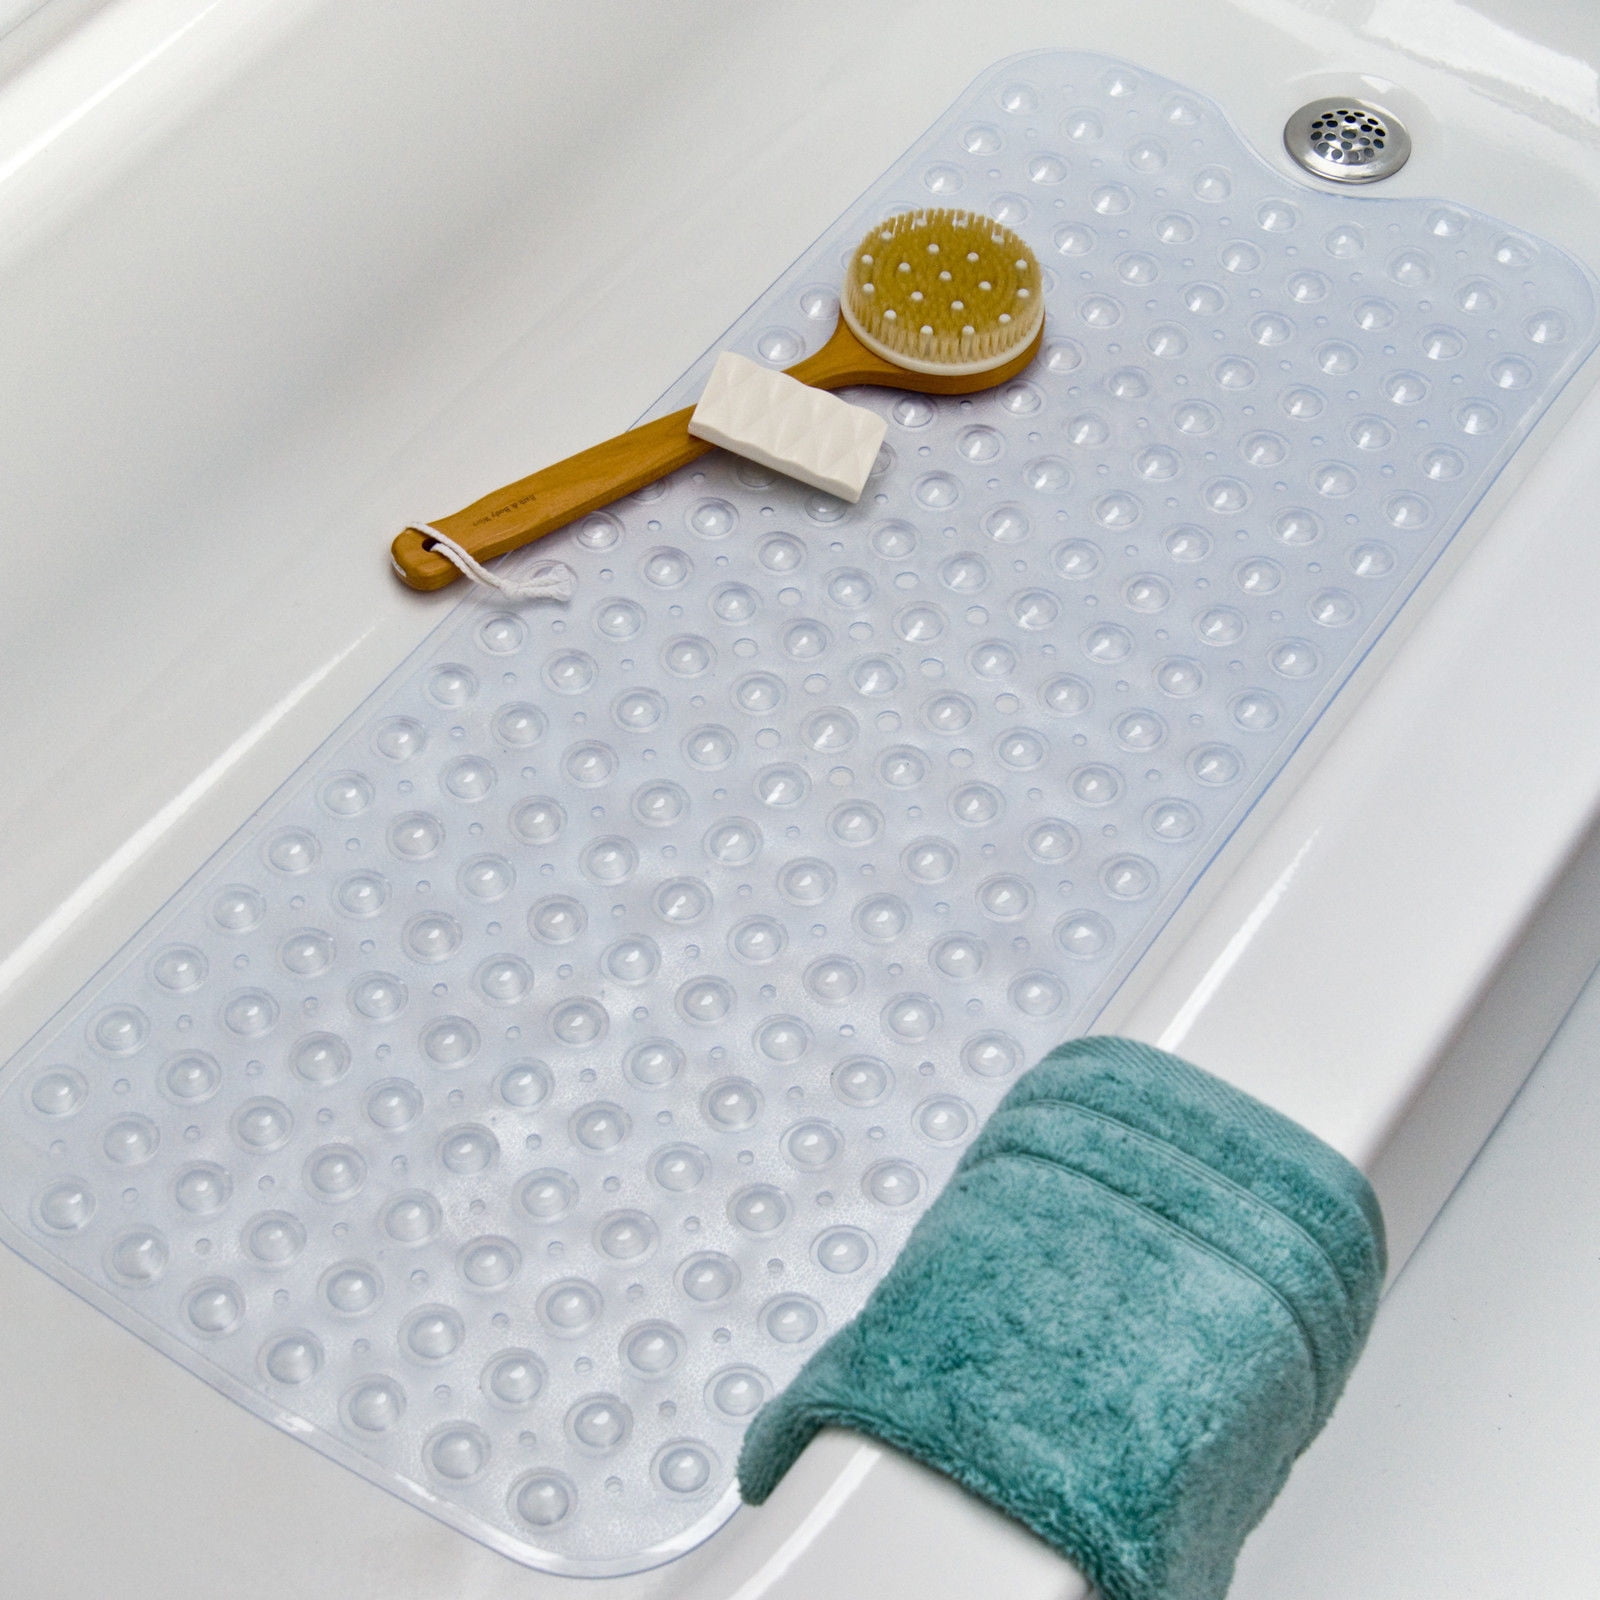 Zijdelings Vulkanisch winnaar Zimtown Extra Long Bath Tub Non Slip Safety Anti Skid Shower Protection  Blue/ Clear Mat - Walmart.com